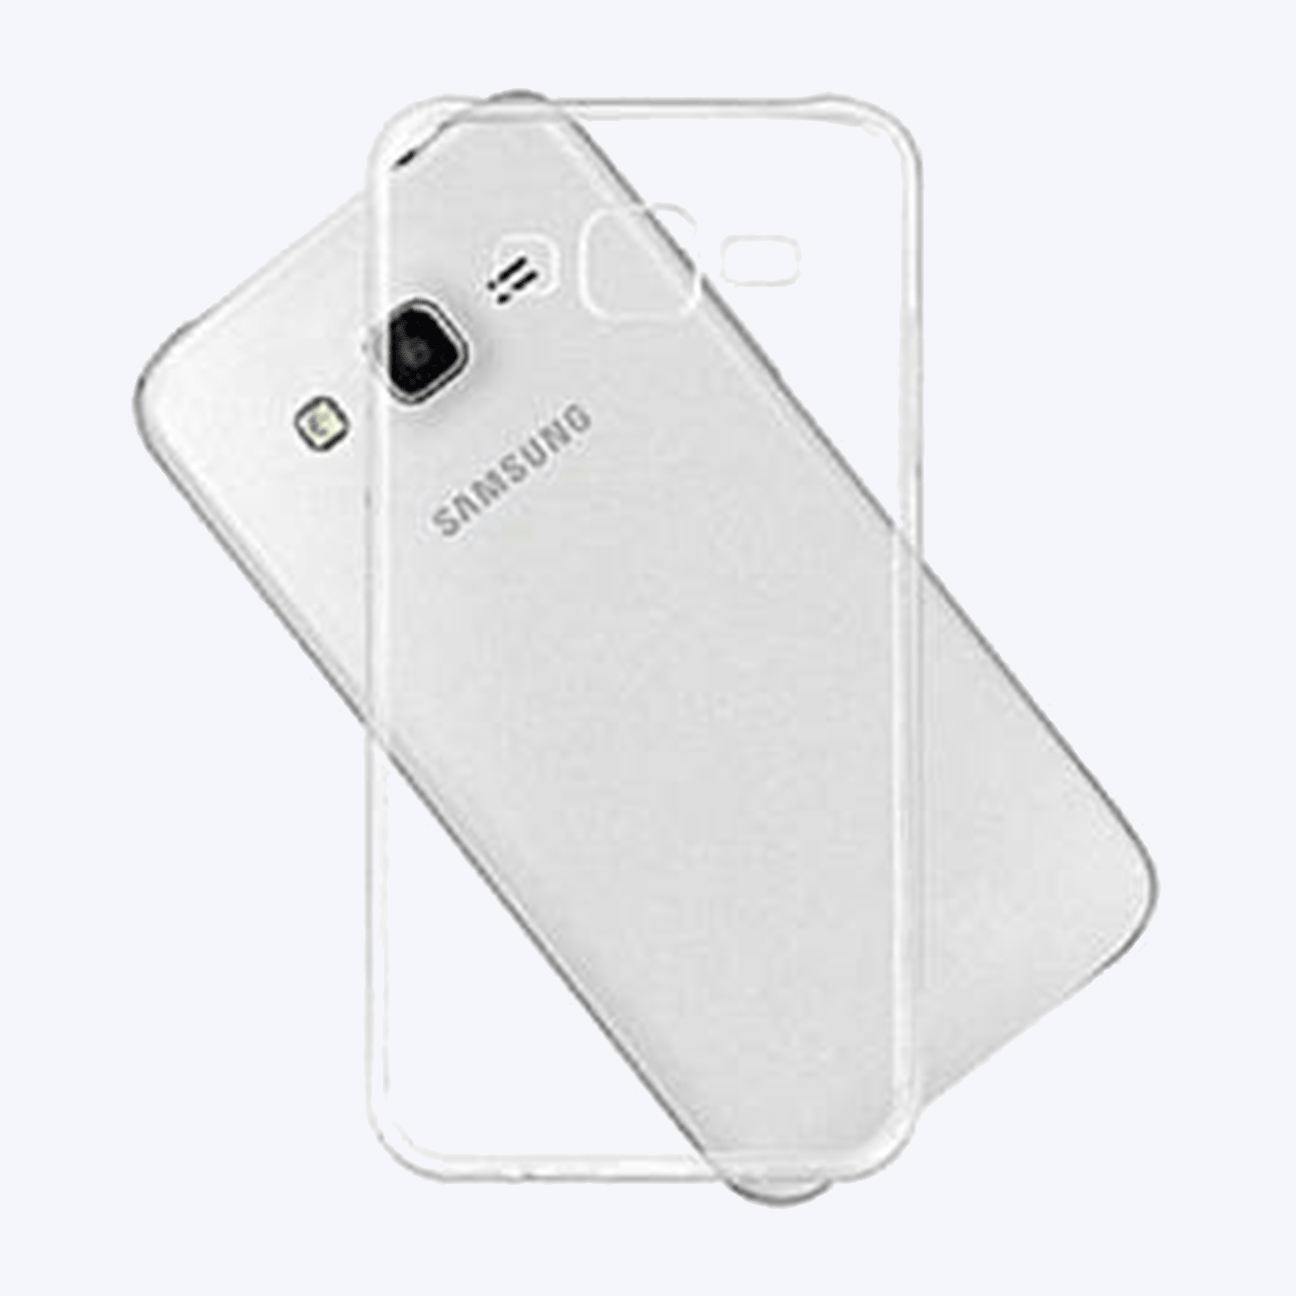 Samsung Galaxy J5 (2015) Transparent Back Cover